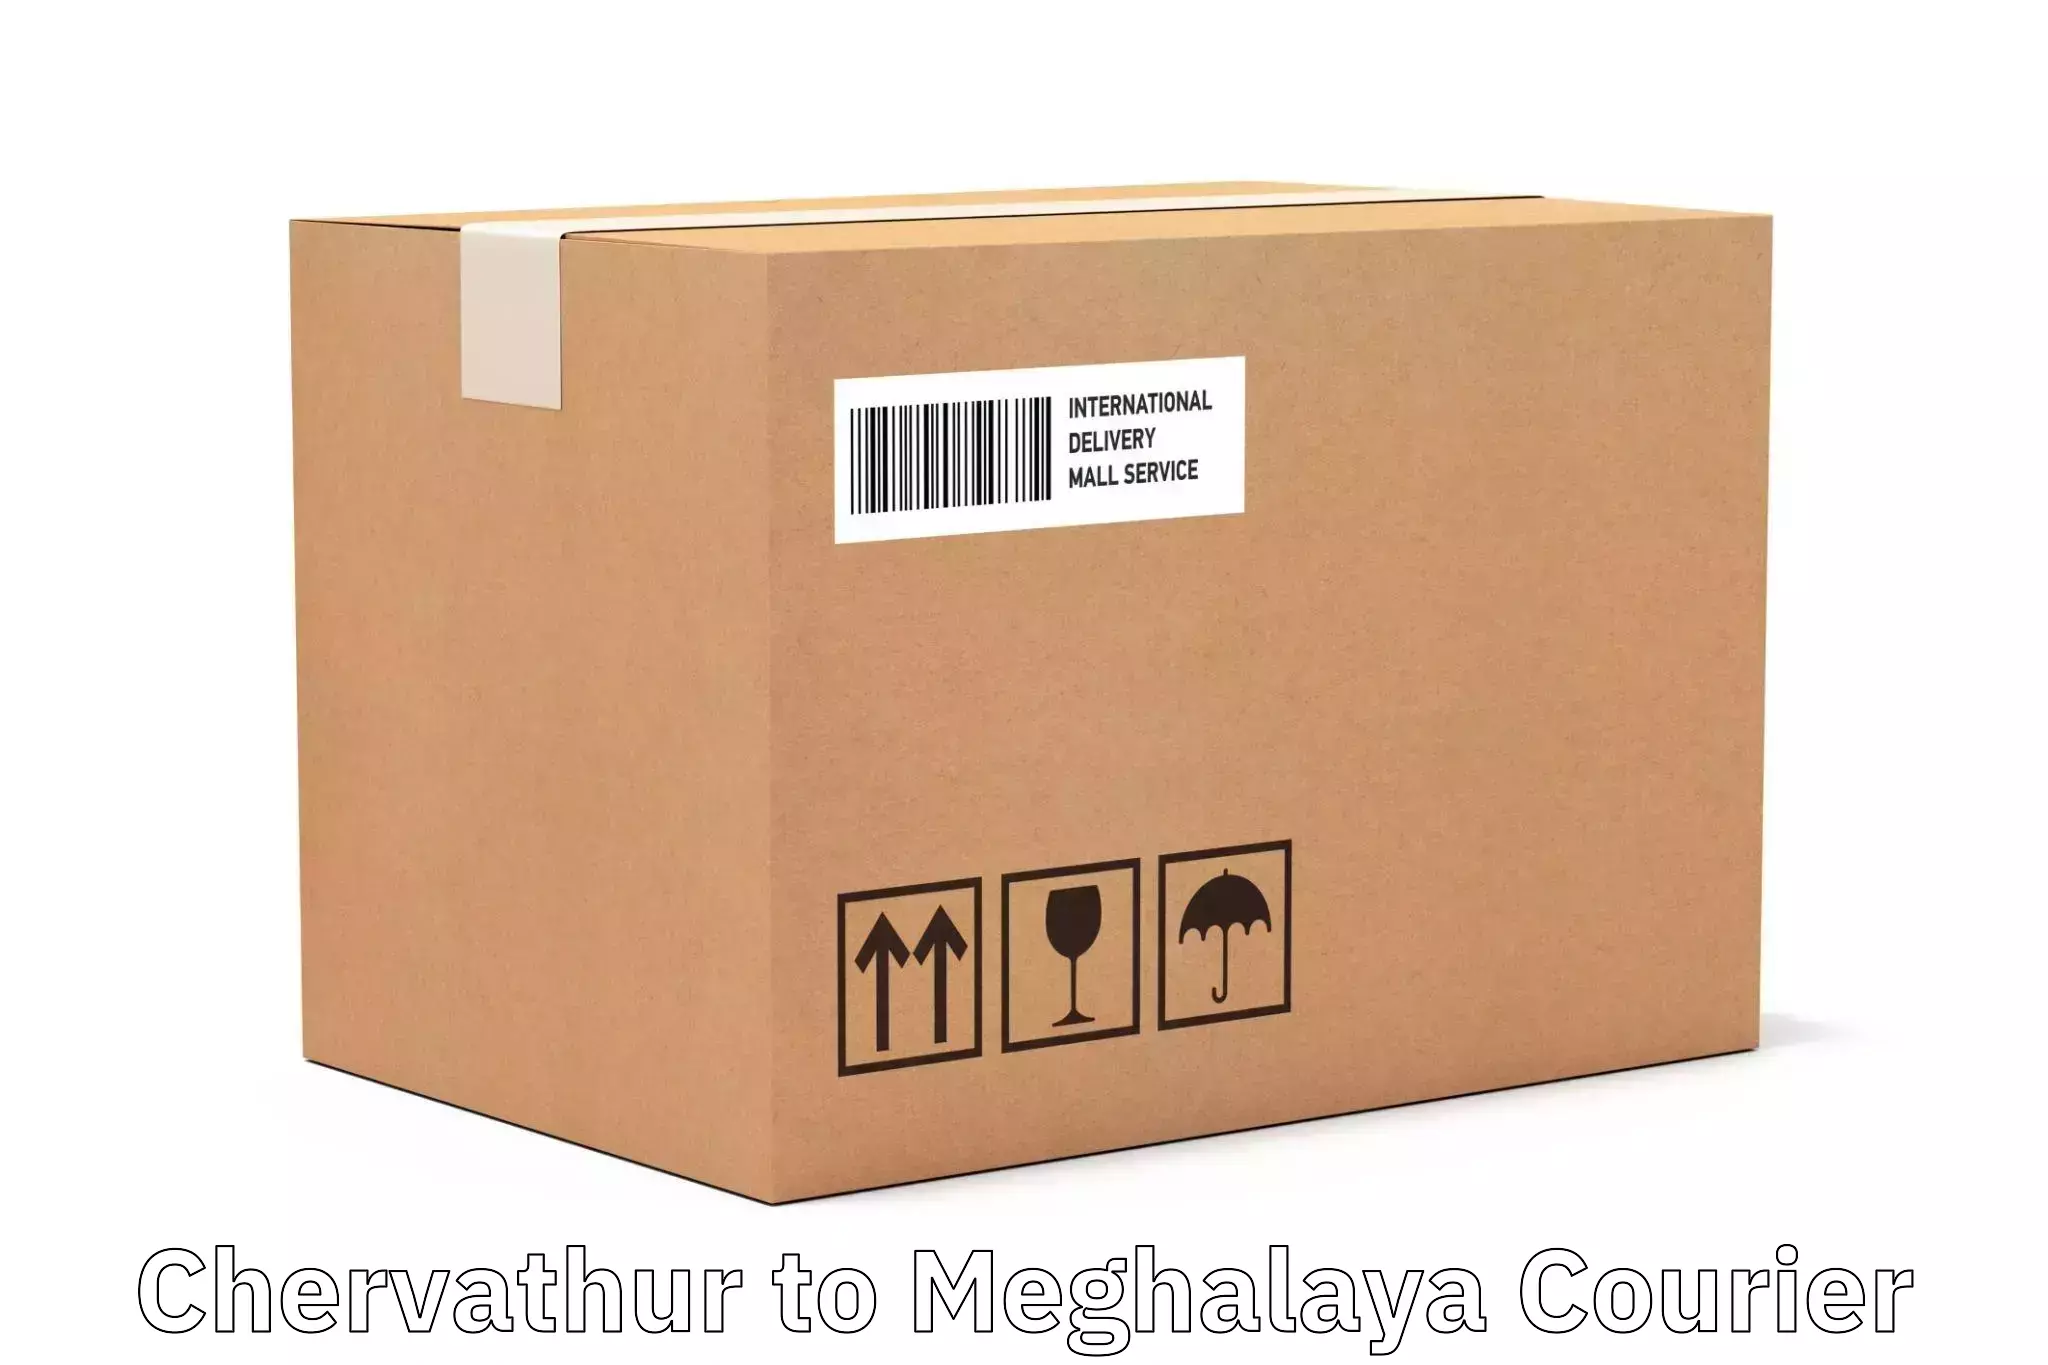 Business shipping needs Chervathur to Cherrapunji